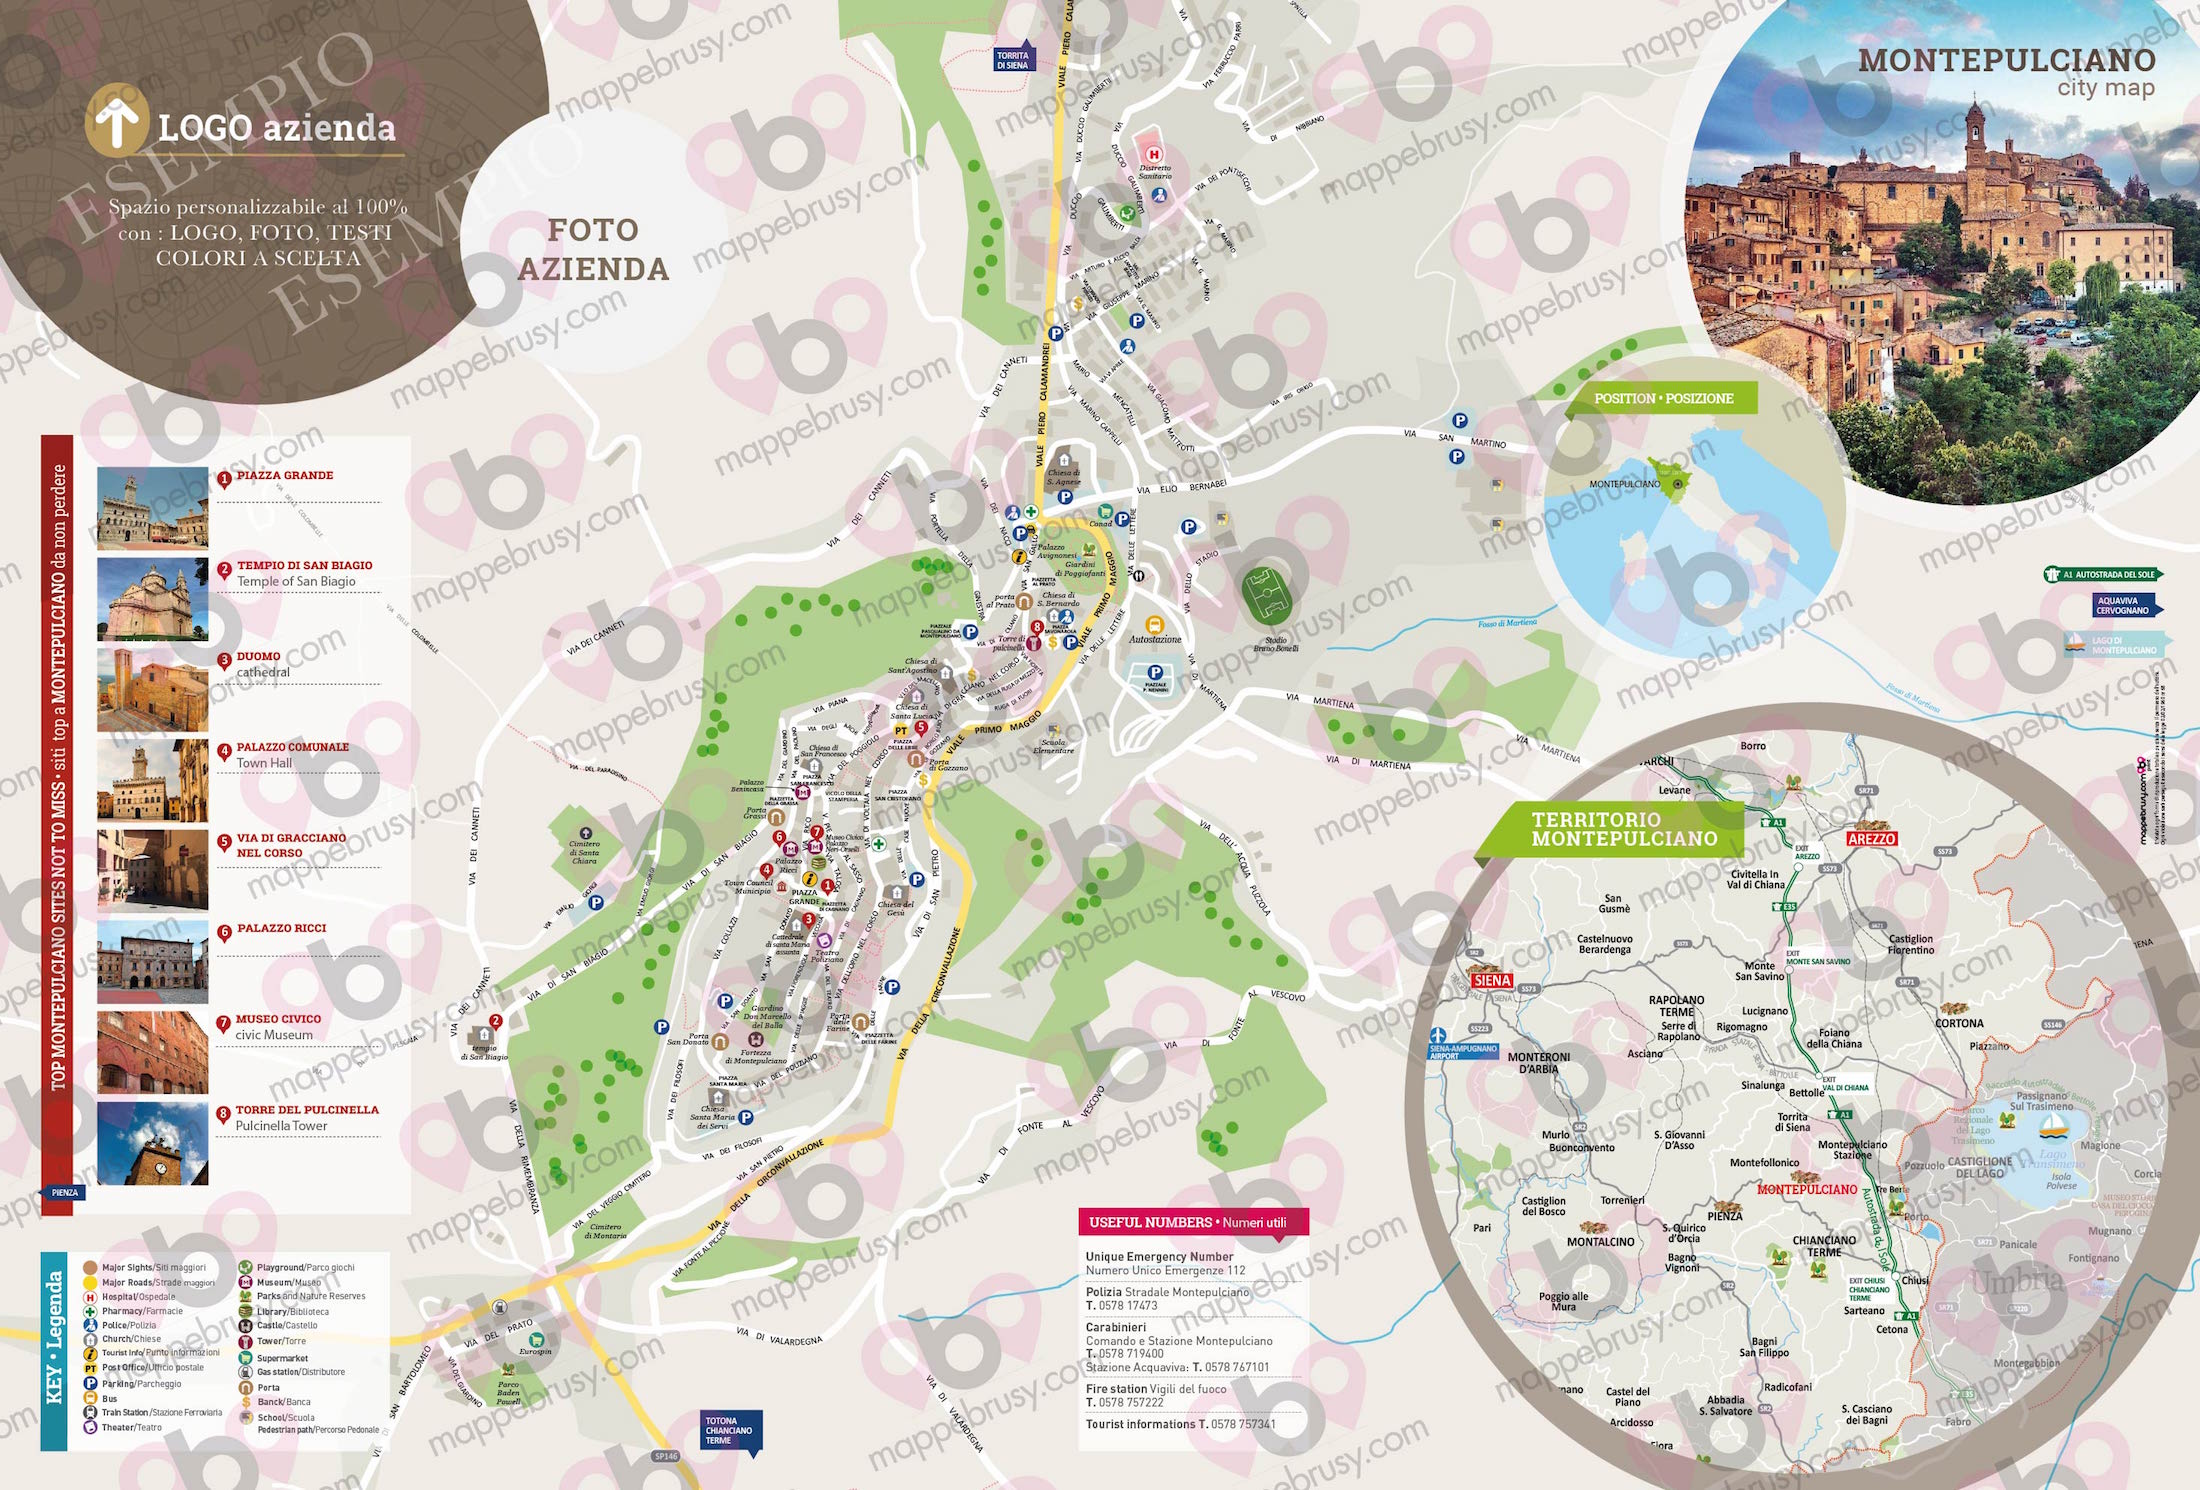 Mappa di Montepulciano - Montepulciano city map - mappa Montepulciano - mappa personalizzata di Montepulciano - mappa tursitica di Montepulciano